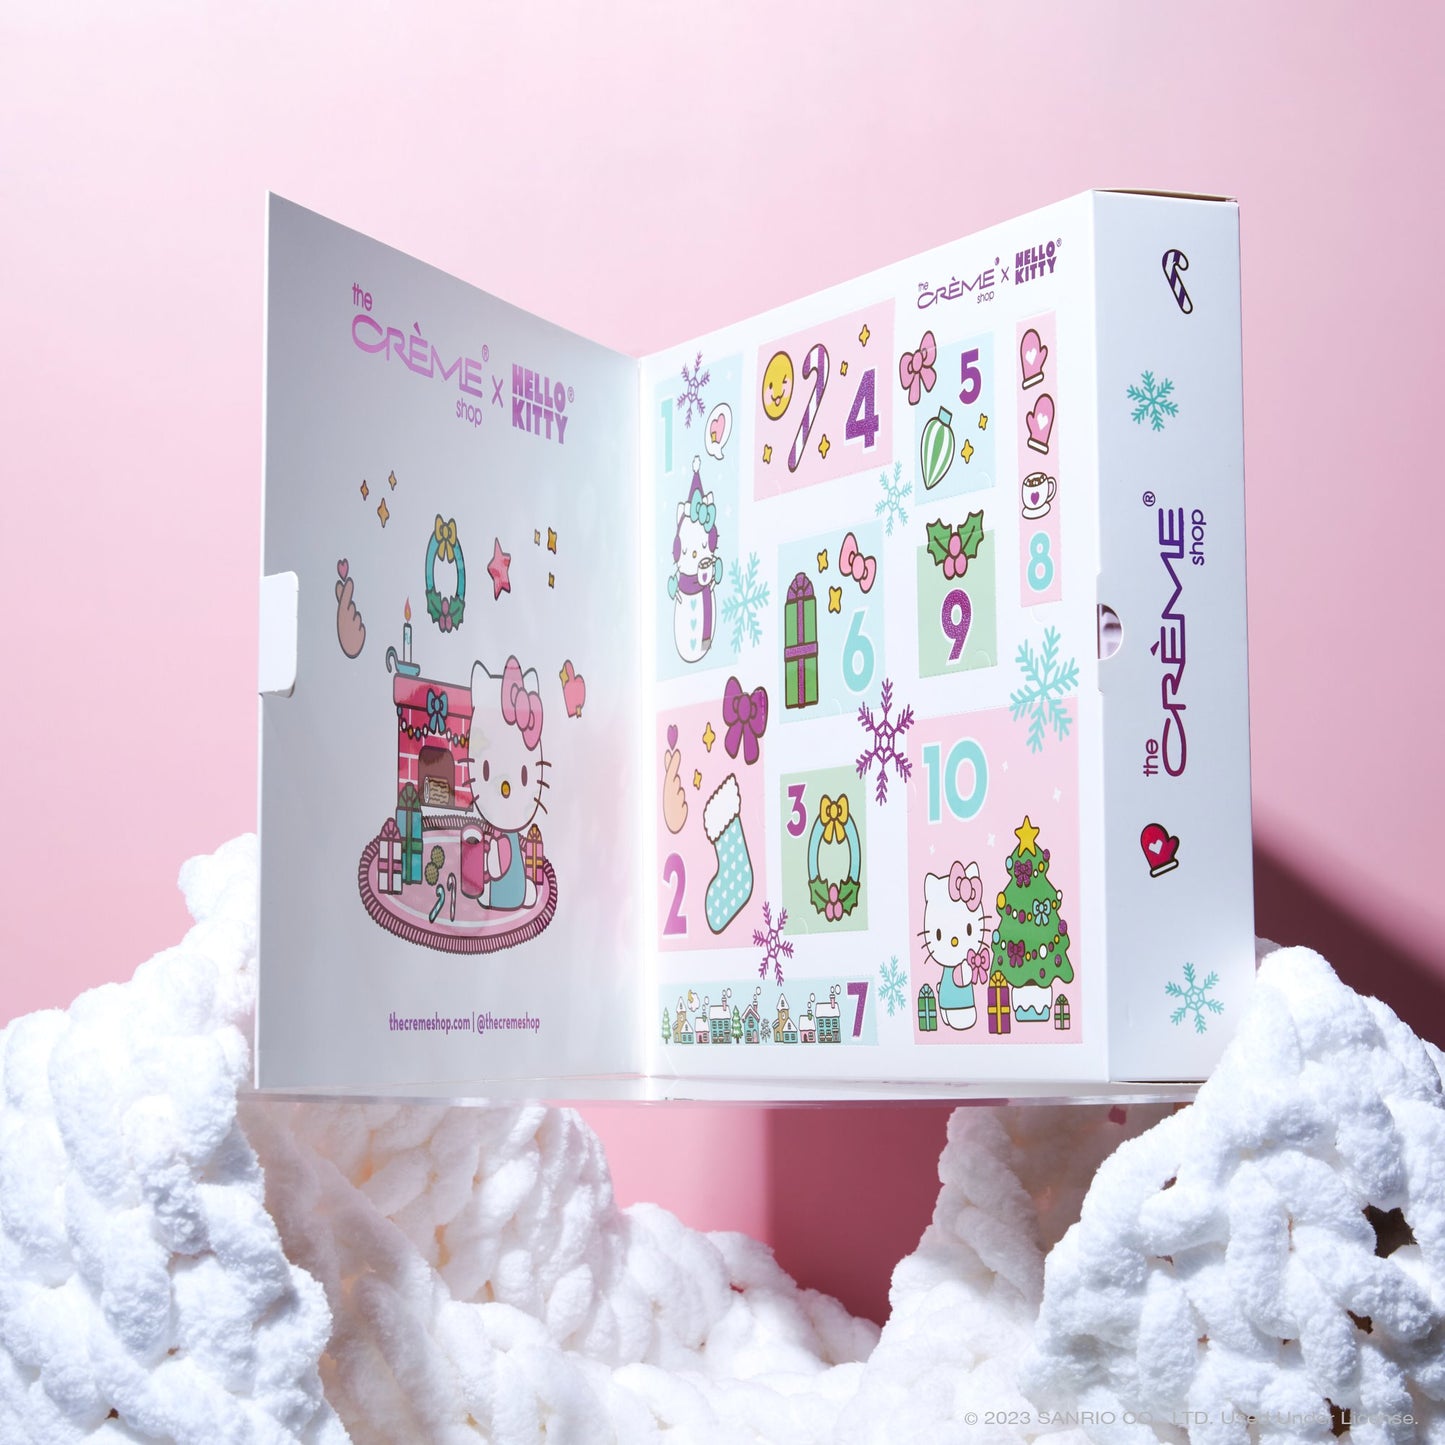 The Crème Shop x Hello Kitty – 10 Days of Supercute Beauty Bundles The Crème Shop x Sanrio 